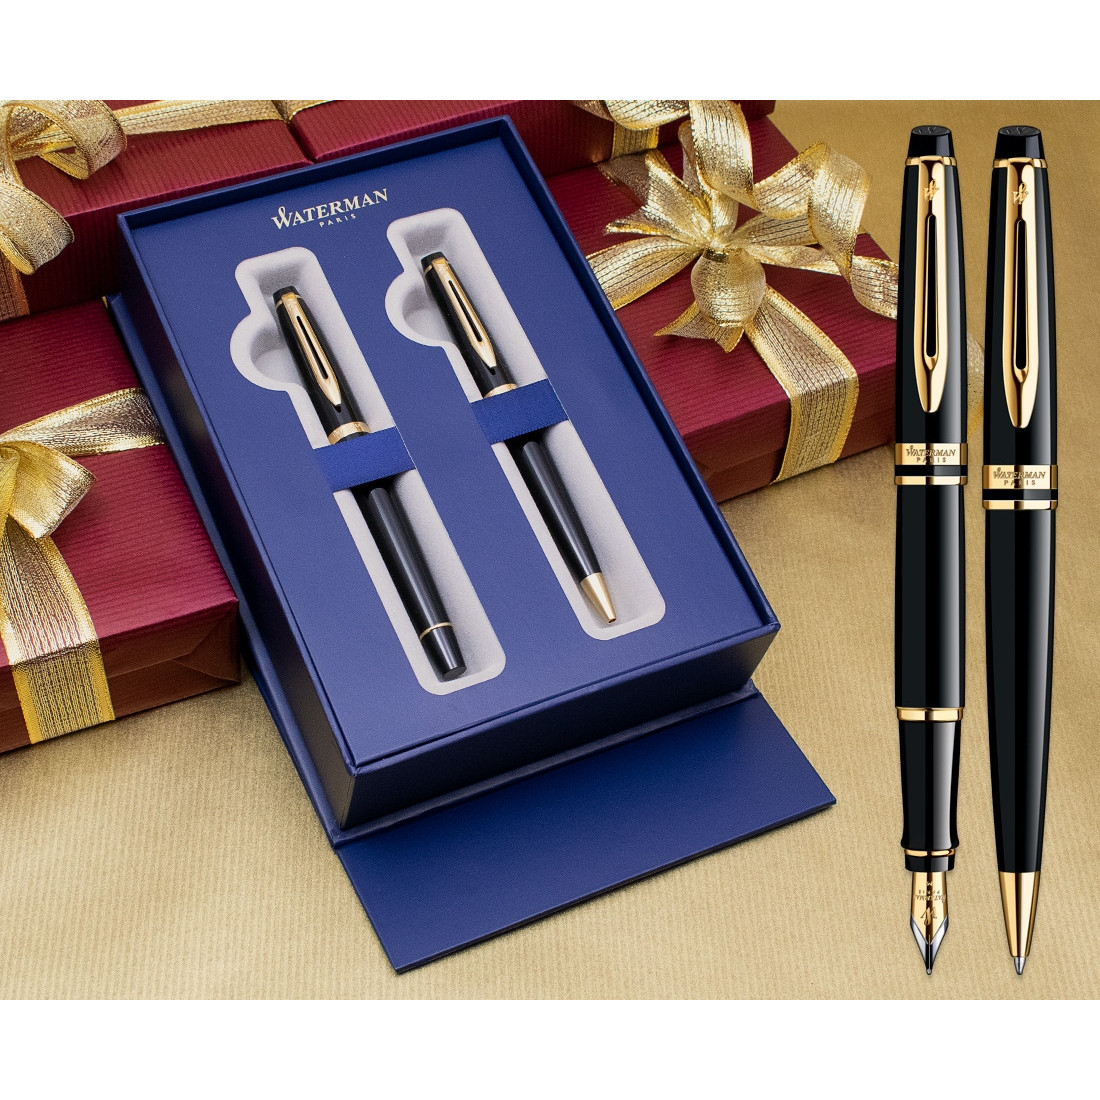 Waterman Expert Fountain & Ballpoint Pen Set - Black Gold Trim in Luxury Gift Box